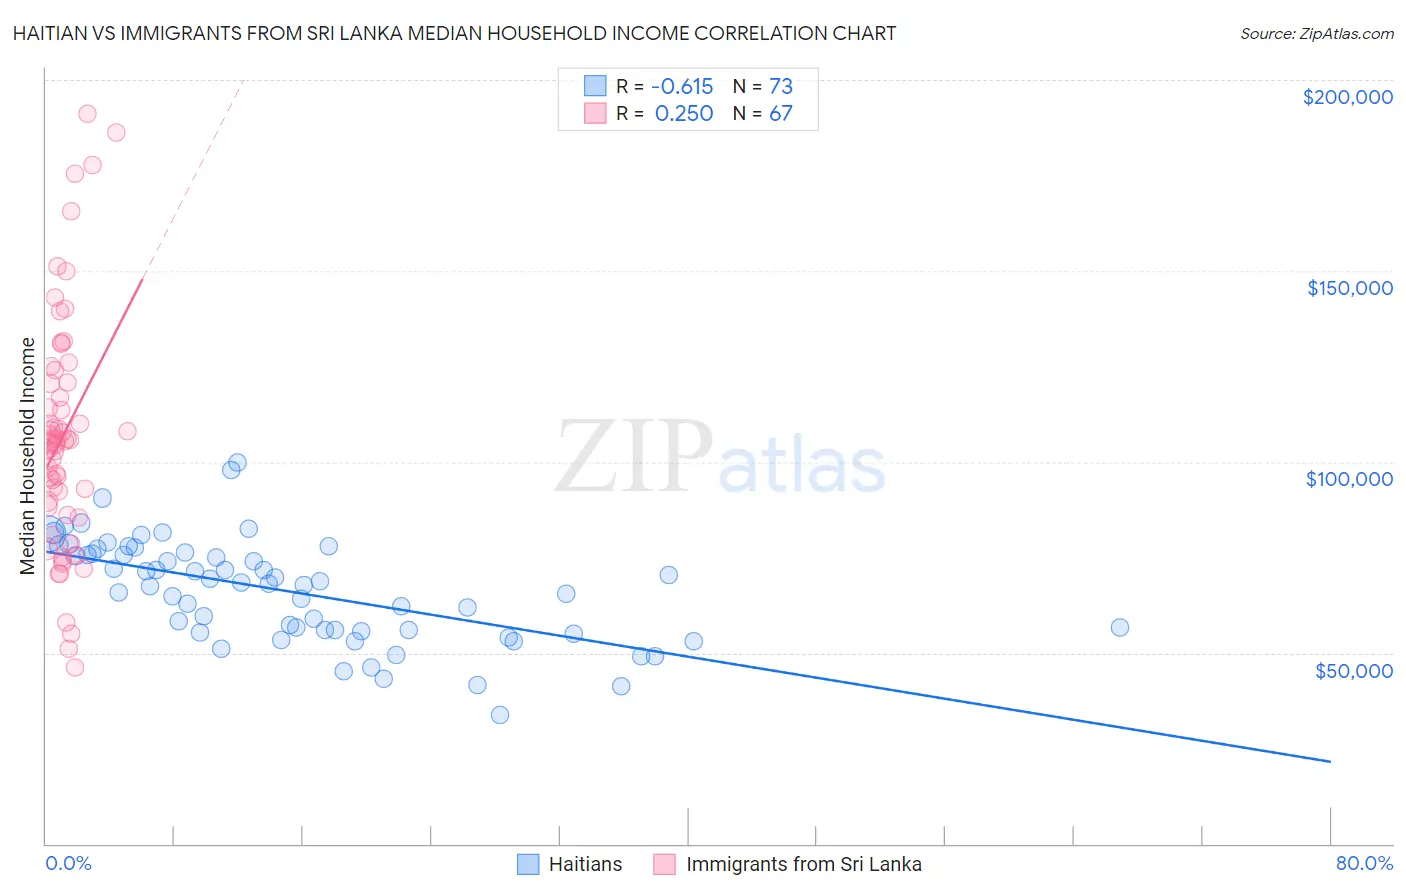 Haitian vs Immigrants from Sri Lanka Median Household Income